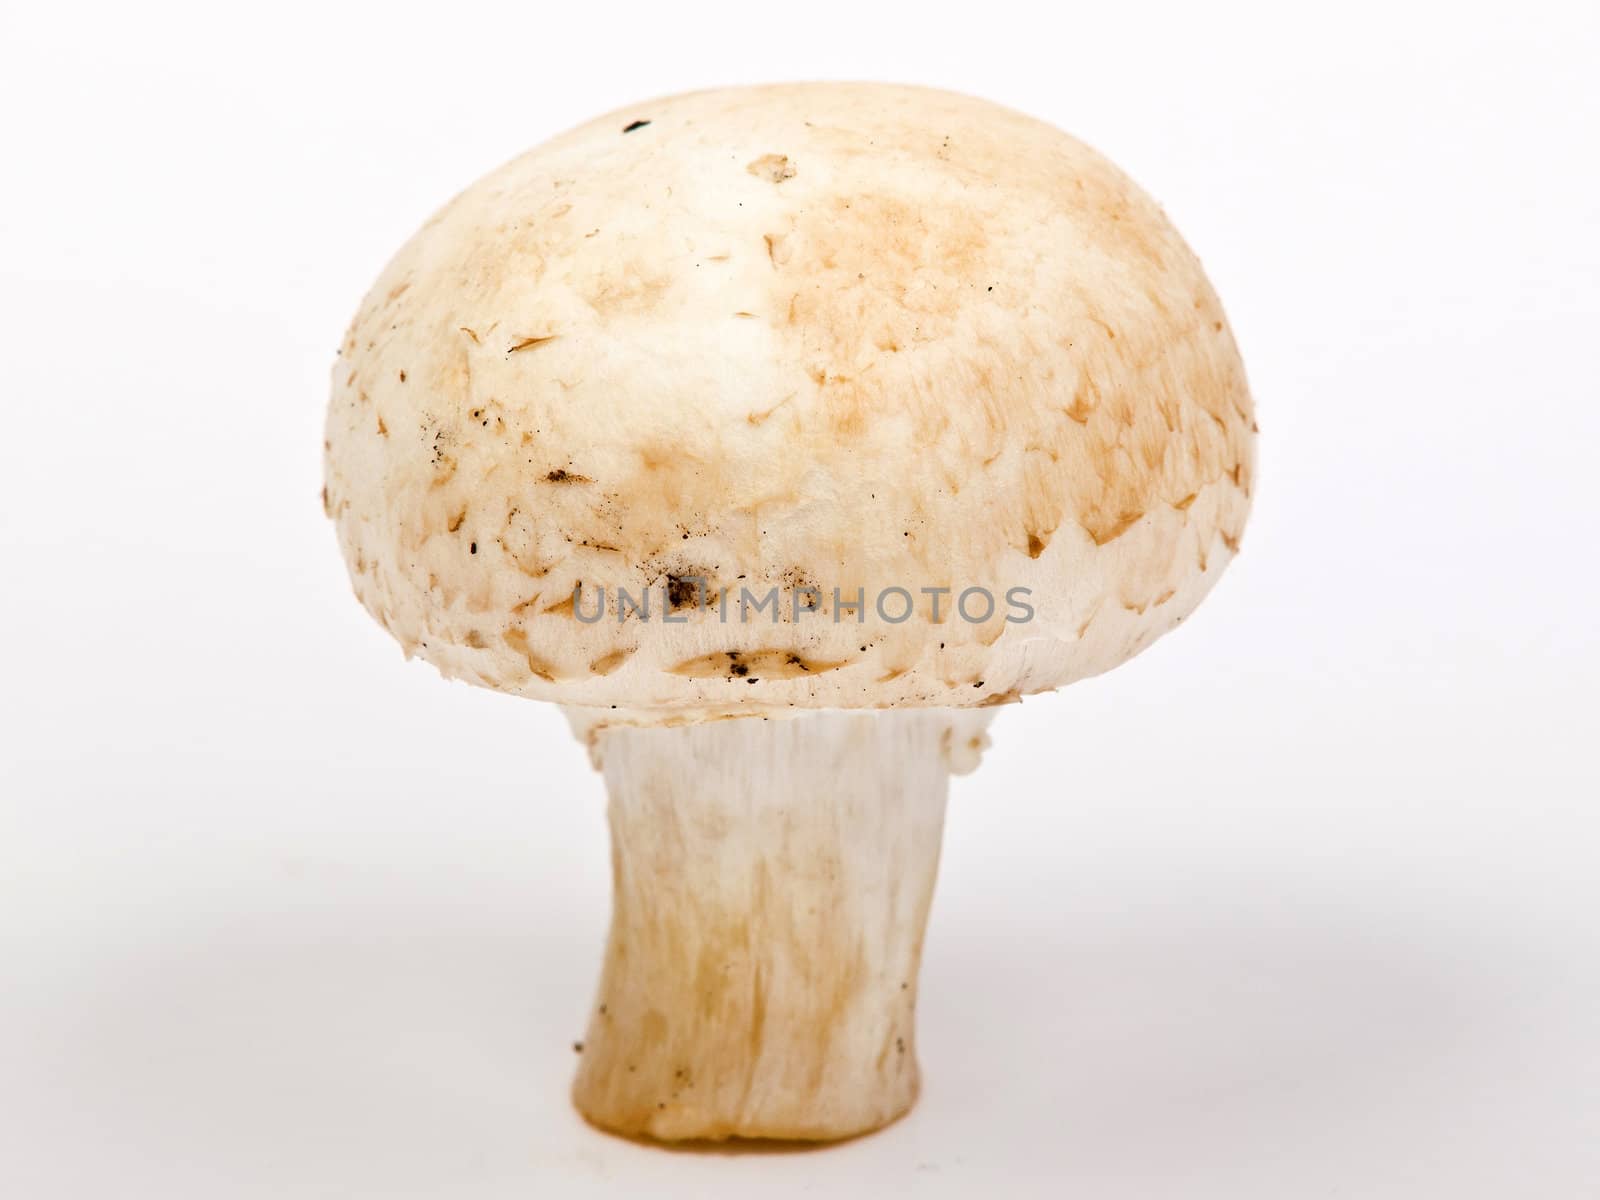 white champignon mushrooms isolated 